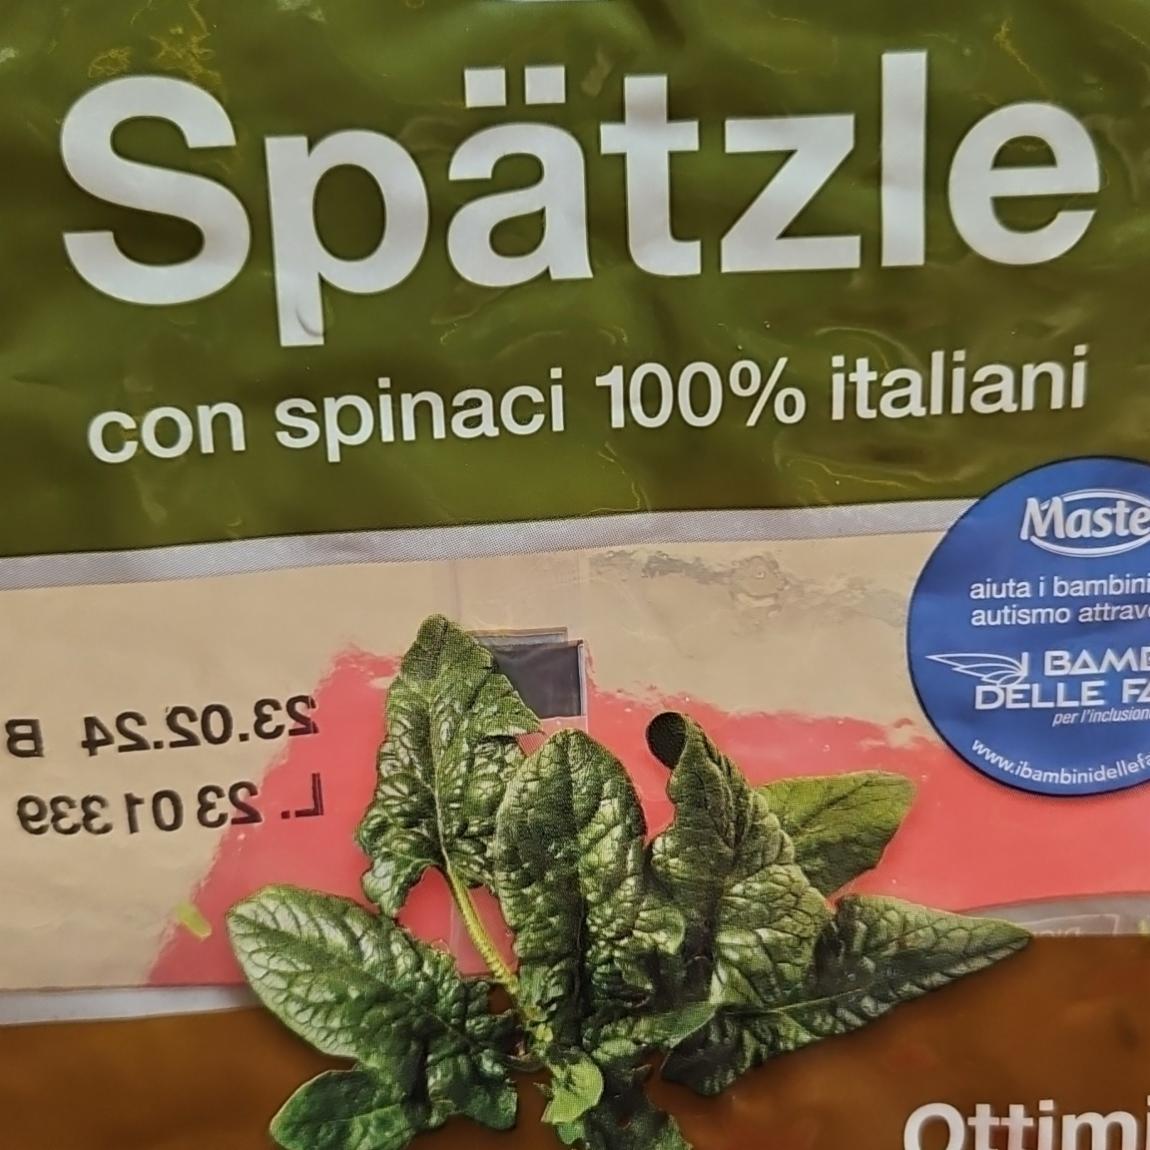 Fotografie - Spätzle con spinaci 100% italiani Master